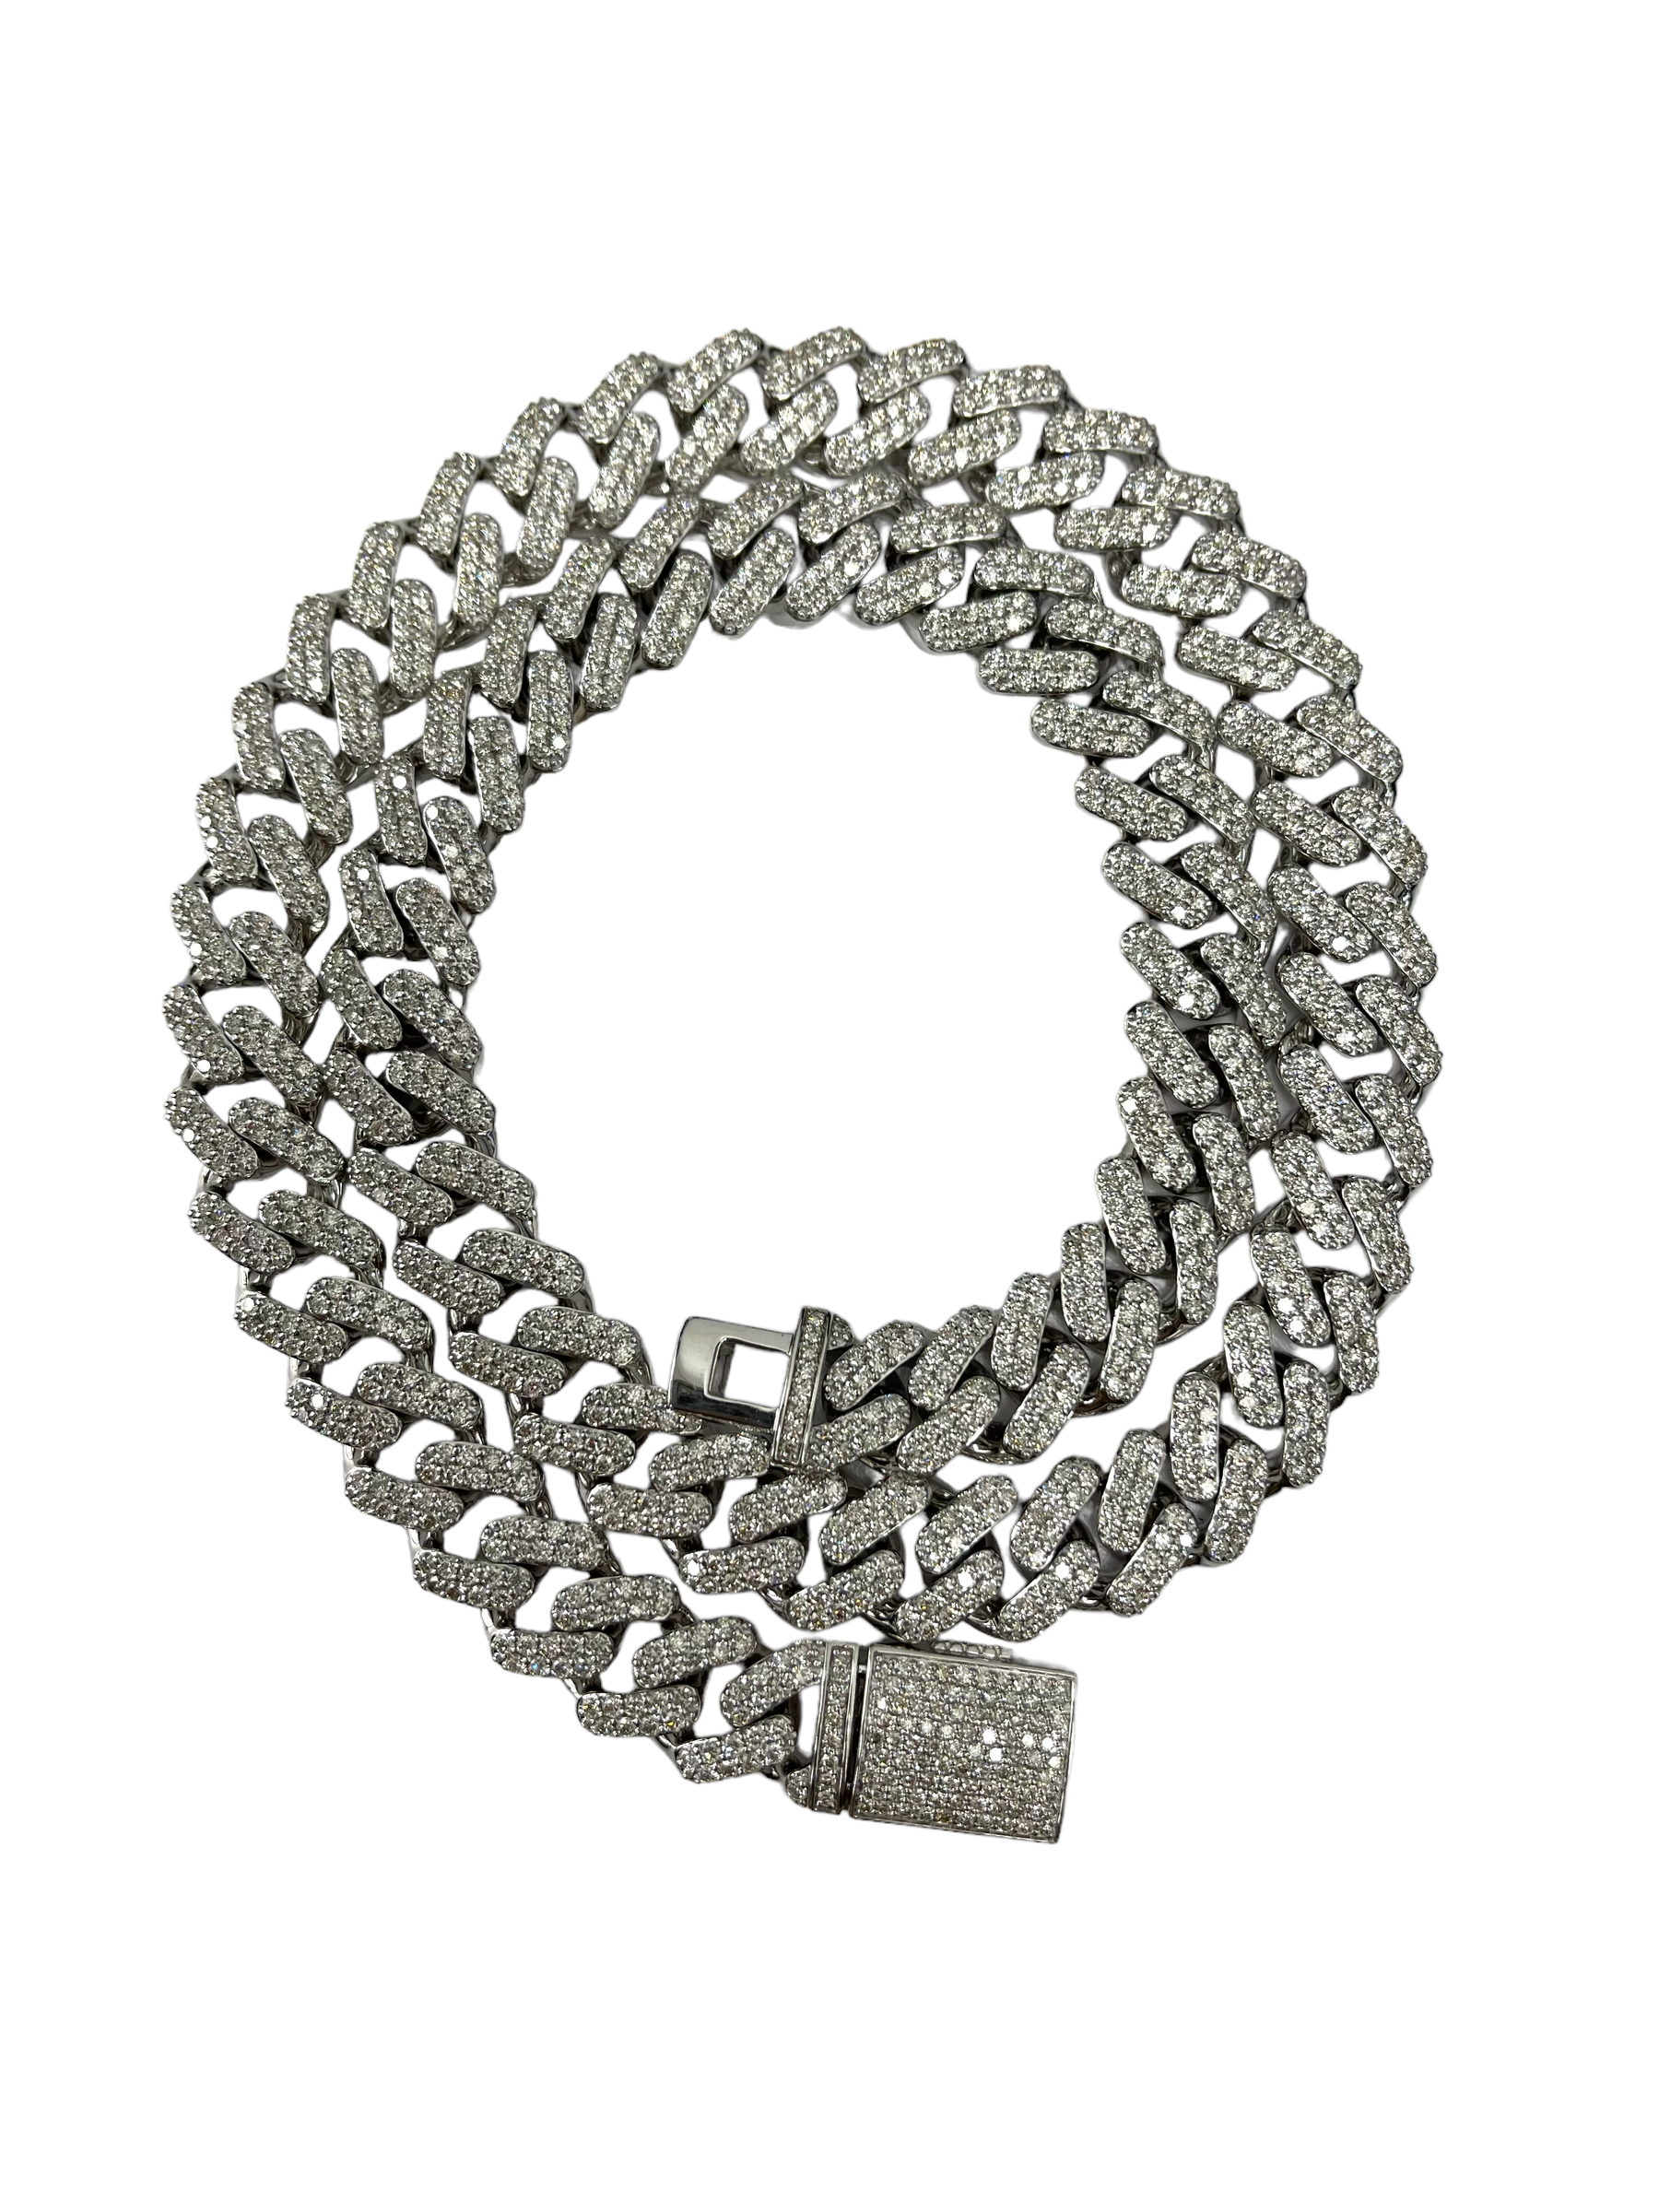 11mm Enamel cuban link necklace chain White/Silver